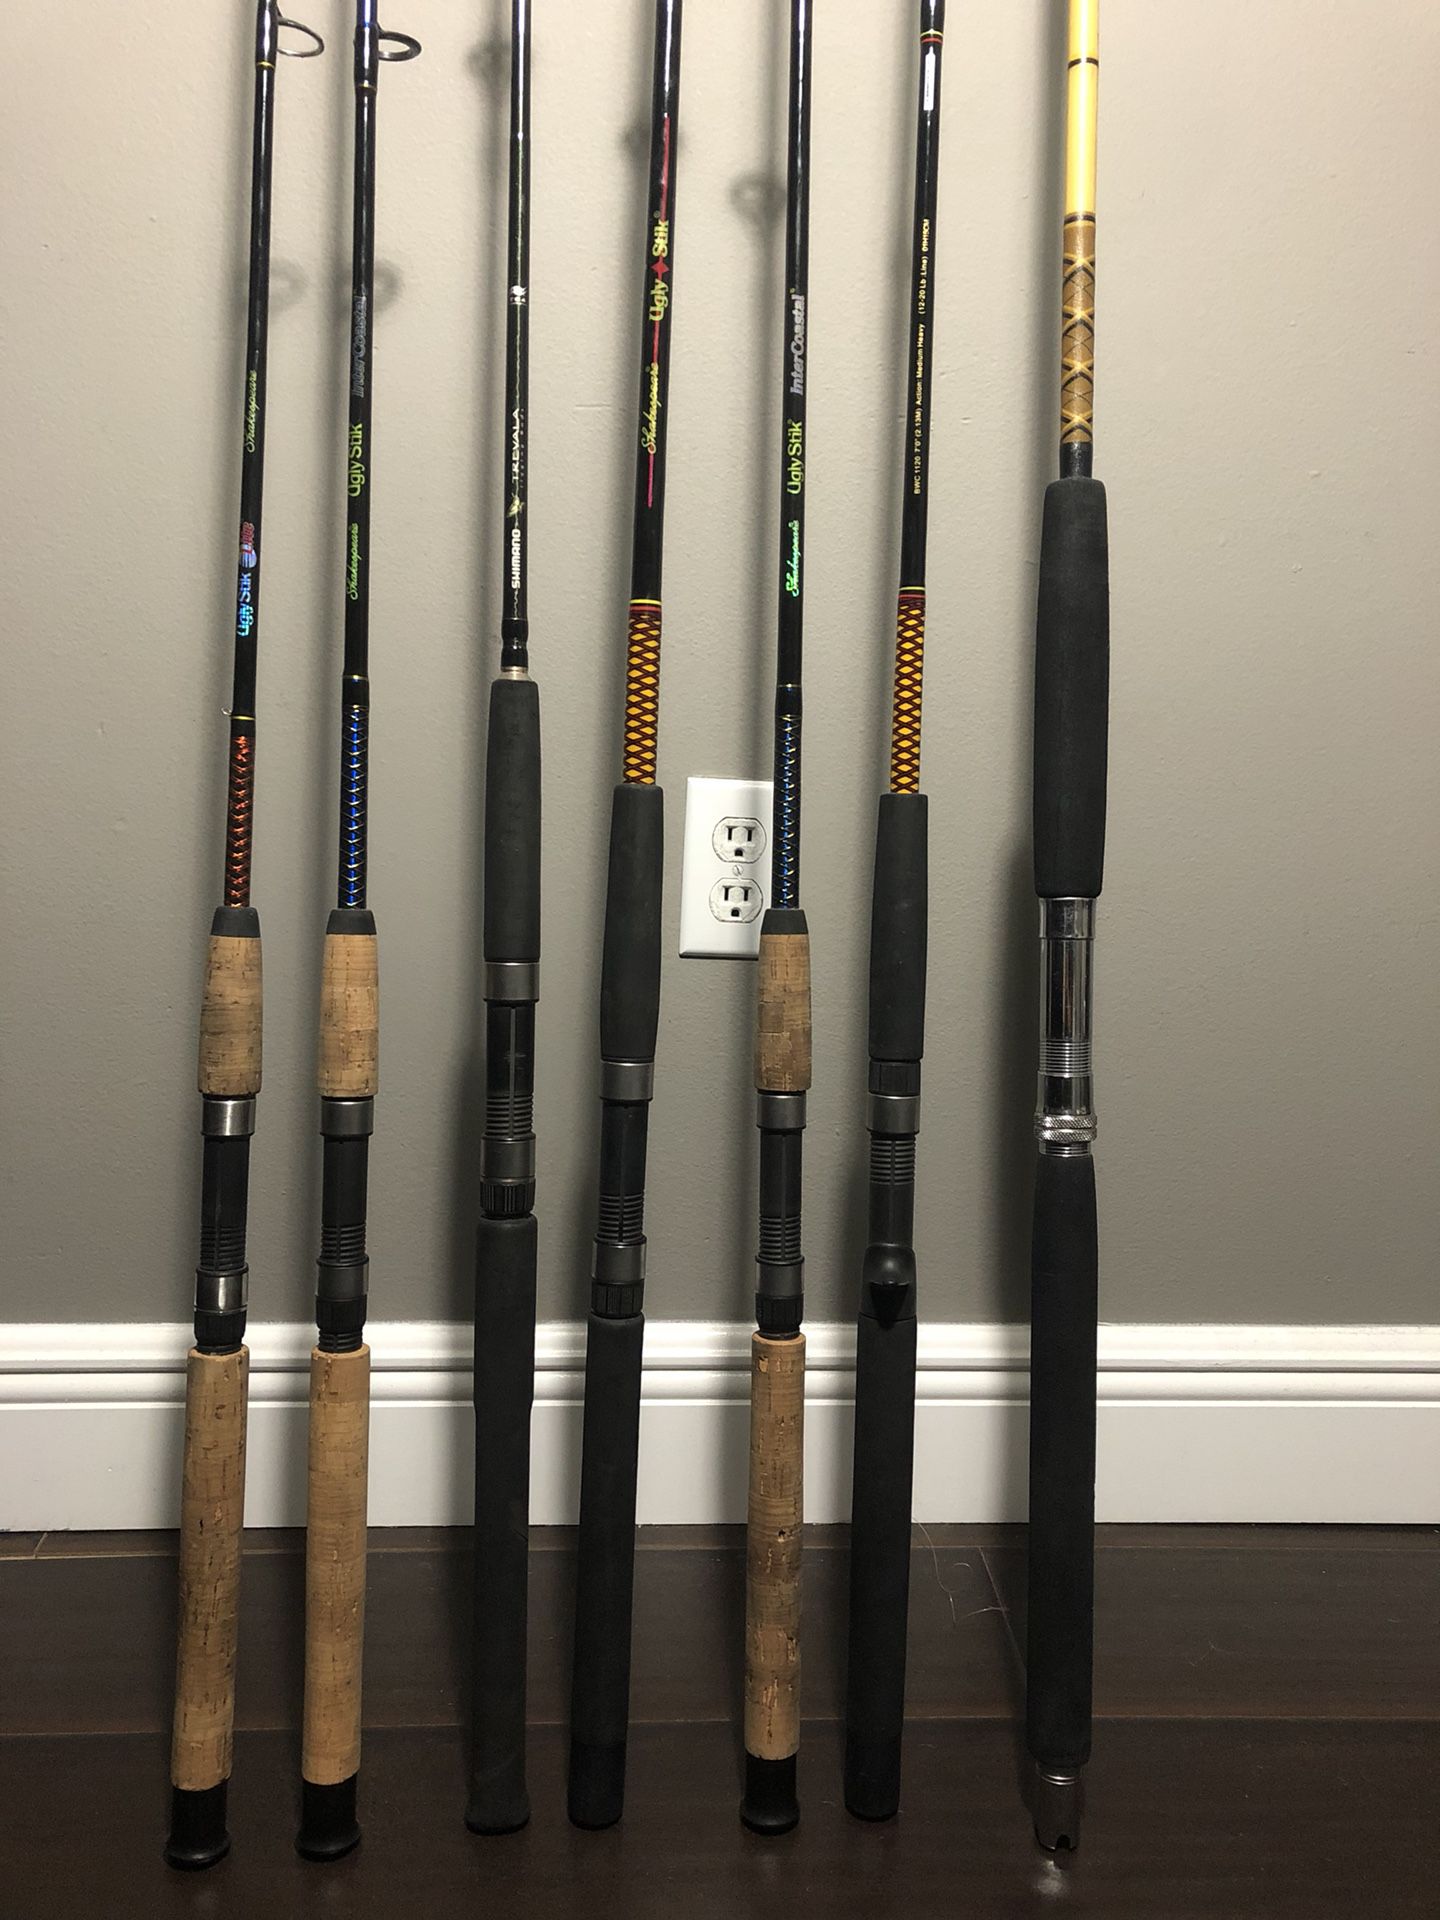 Fishing rods/rod holders